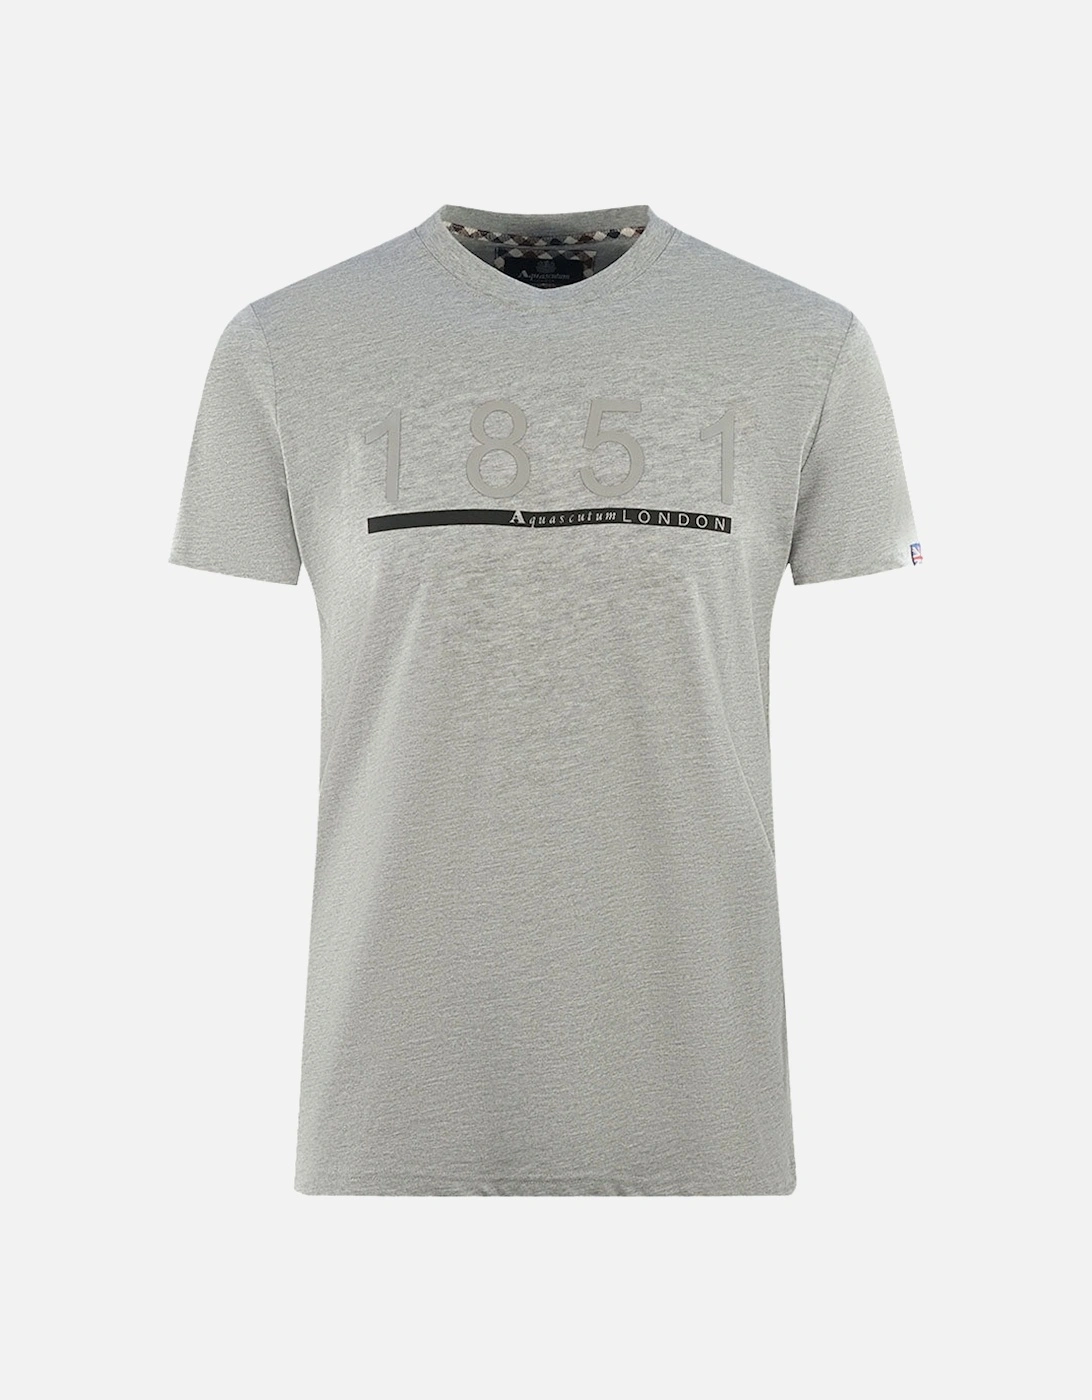 London 1851 Grey T-Shirt, 4 of 3